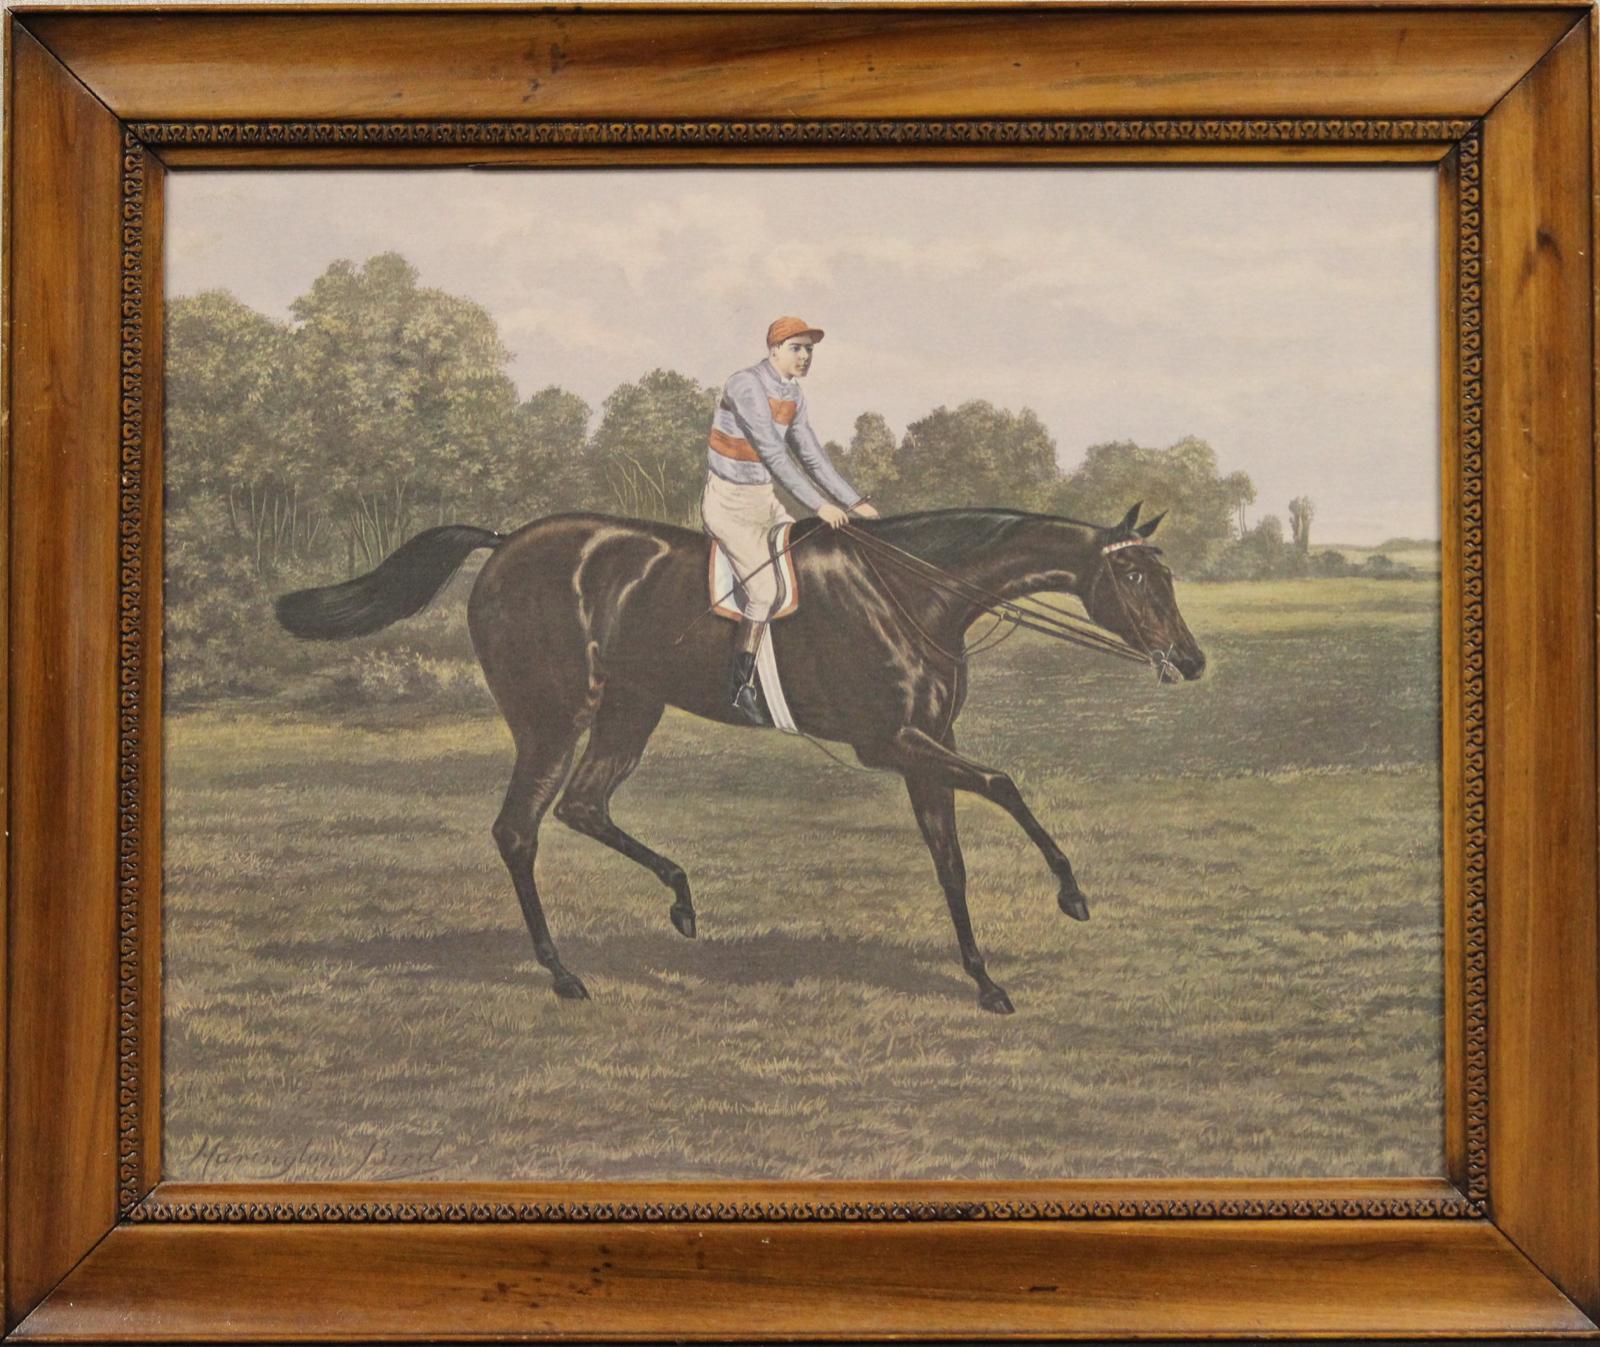 Classic colour equestrian sporting print c1890 by Harrington Bird (1846-1936) (LL)

Print Sz: 15 1/2"H x 19 1/2"W

Frame Sz: 21"H x 25"W

Color Litho

c1890s

HARRINGTON BIRD, JOHN ALEXANDER
British, (1846-1936)
John Alexander Harrington Bird was a